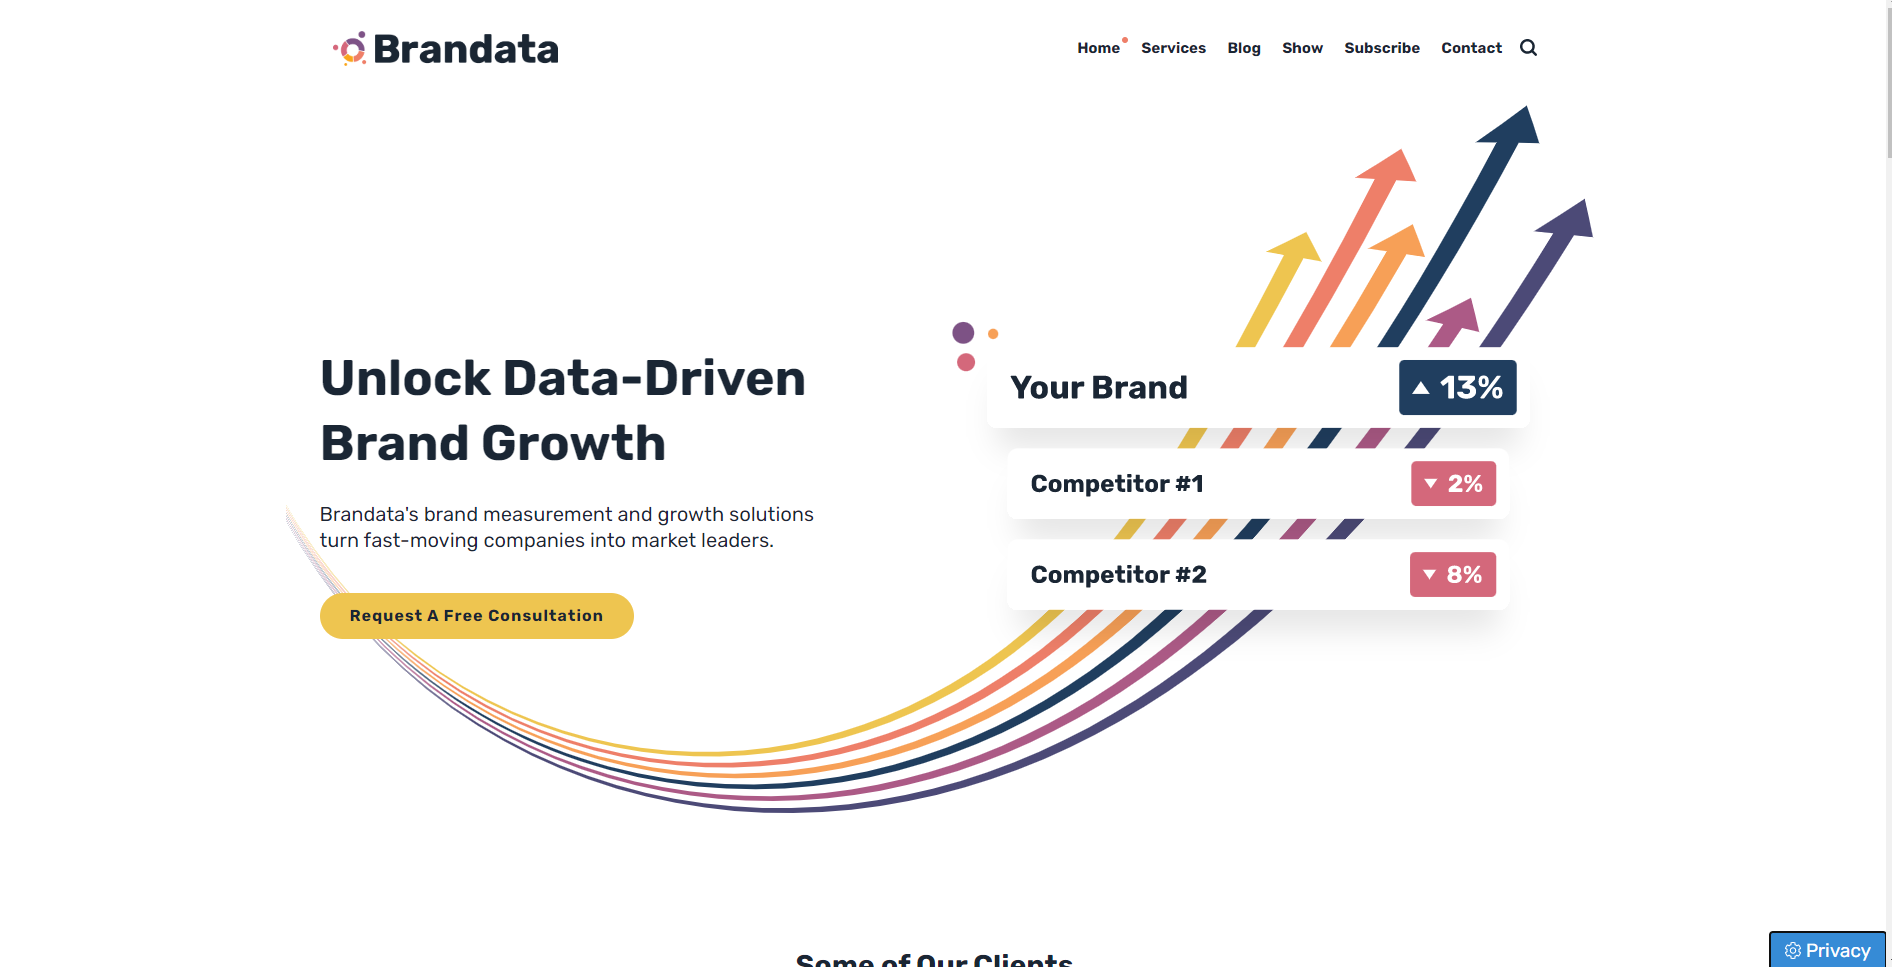 Brandata homepage, unlock data-driven brand growth